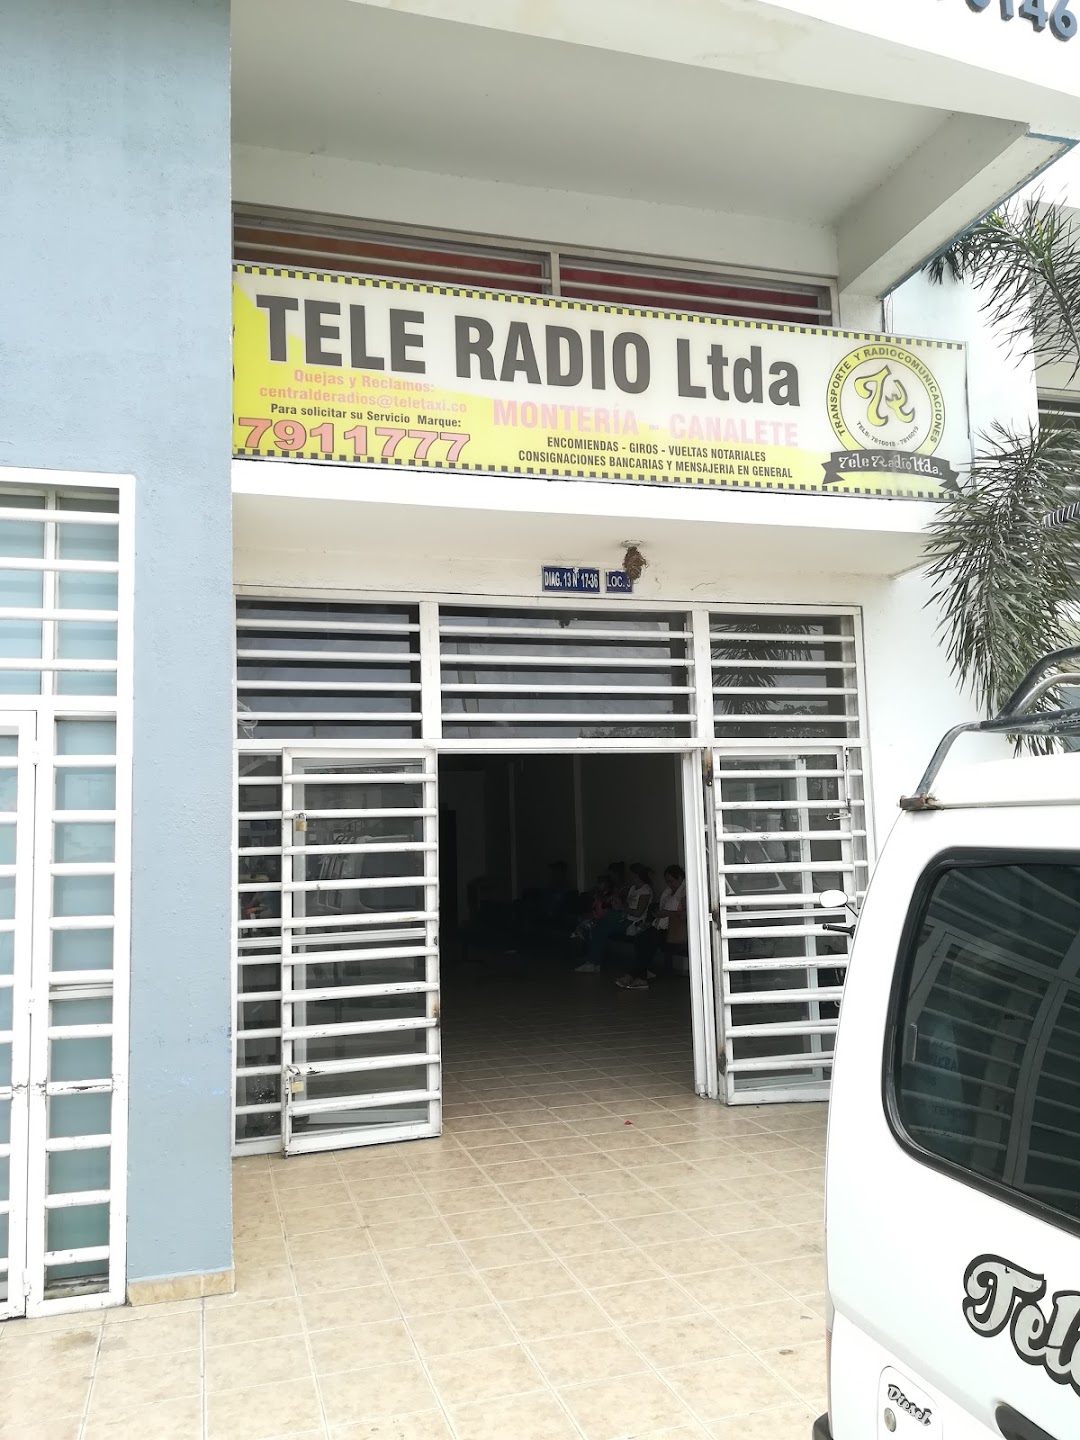 Teleradio Ltda